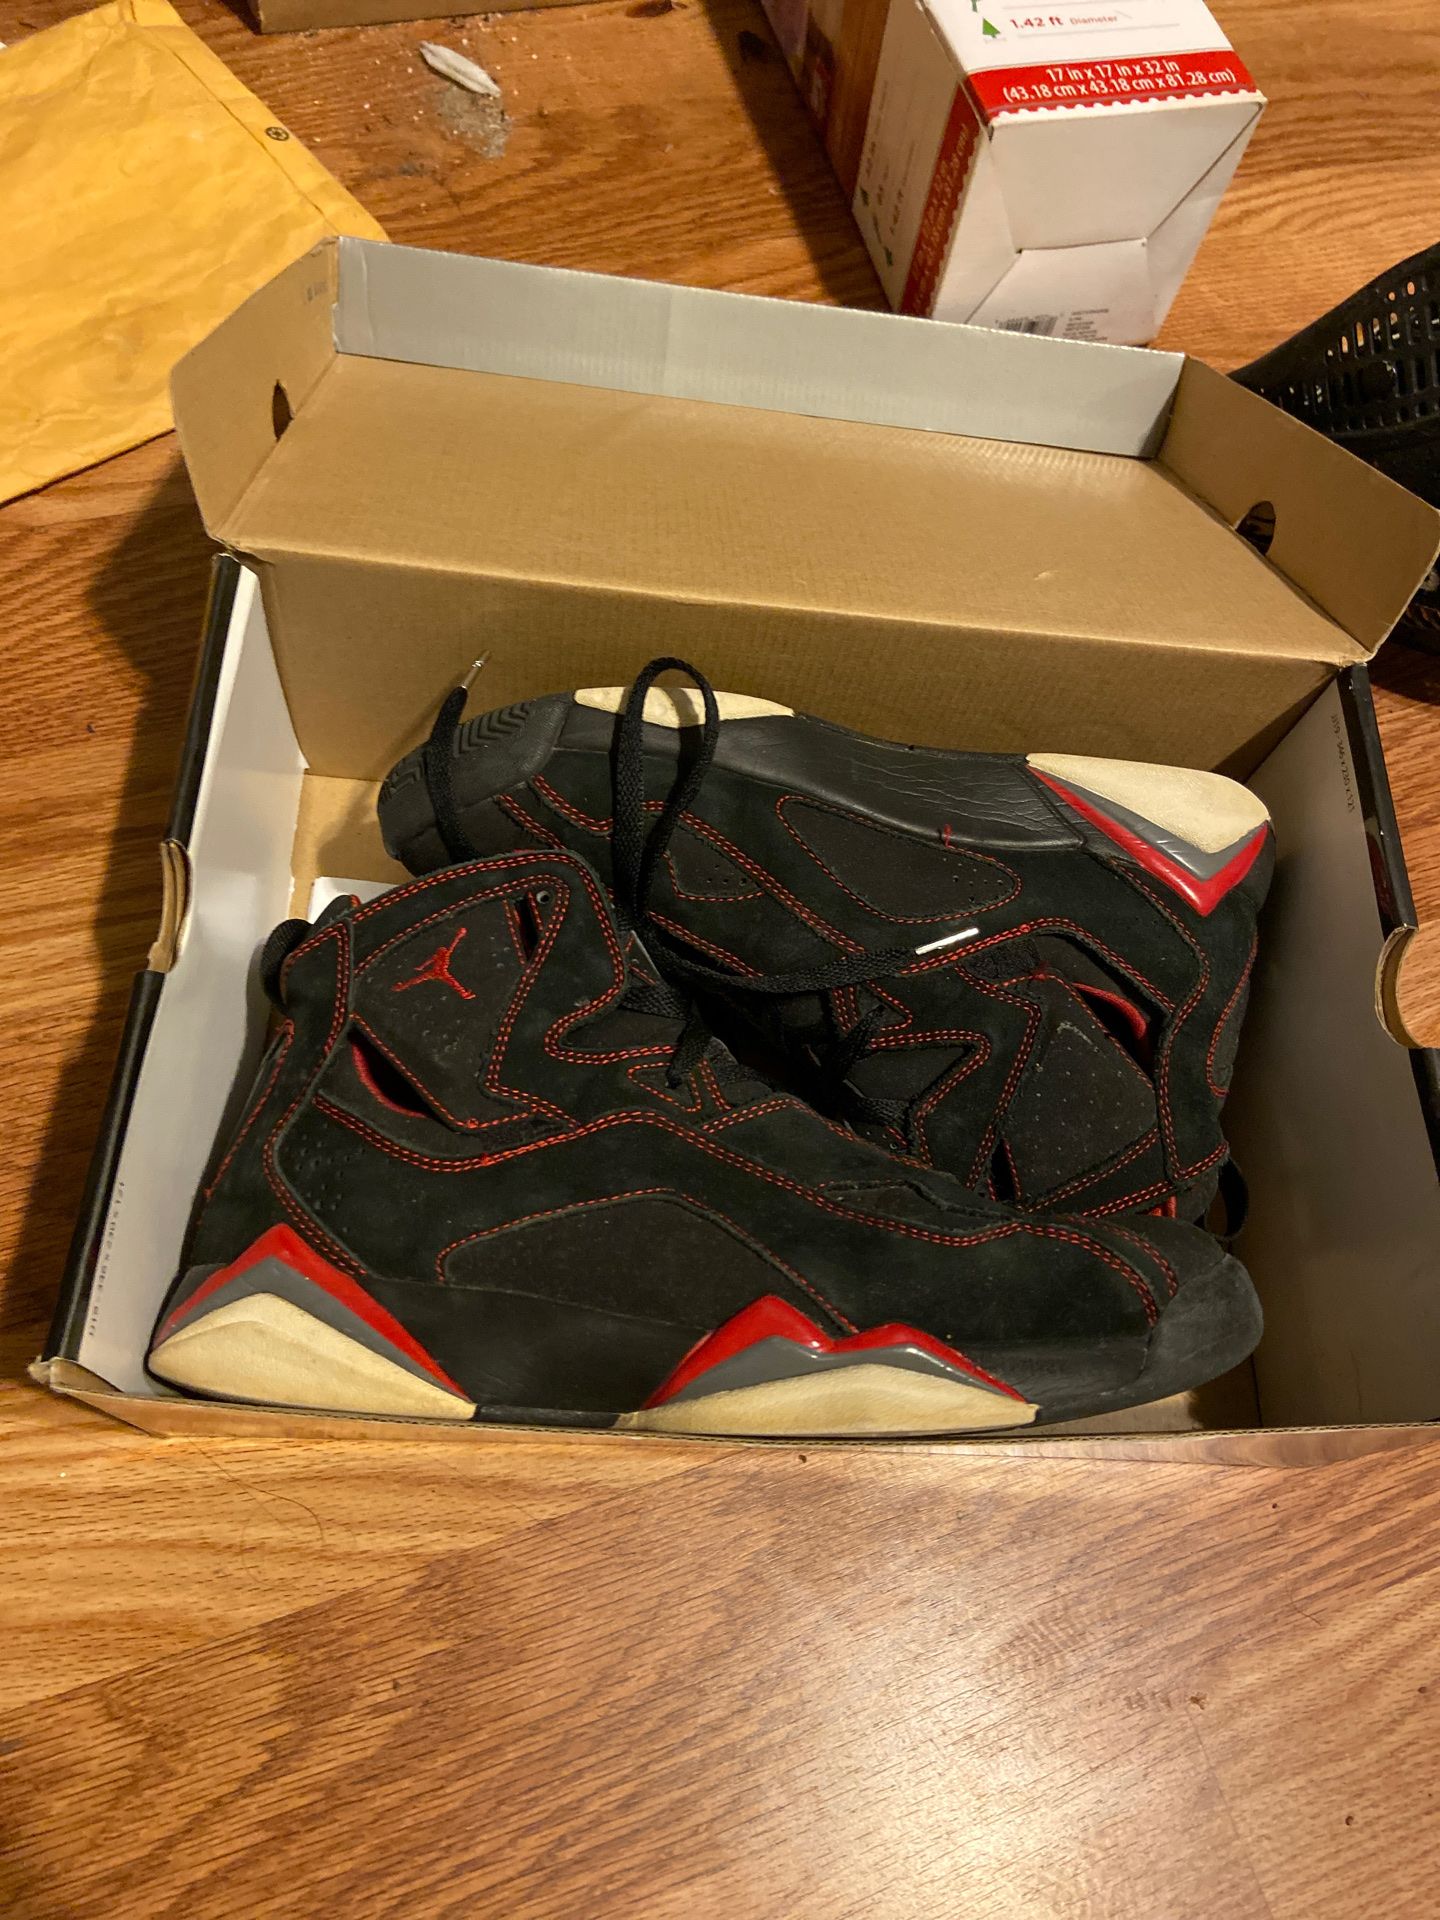 Jordans size 10